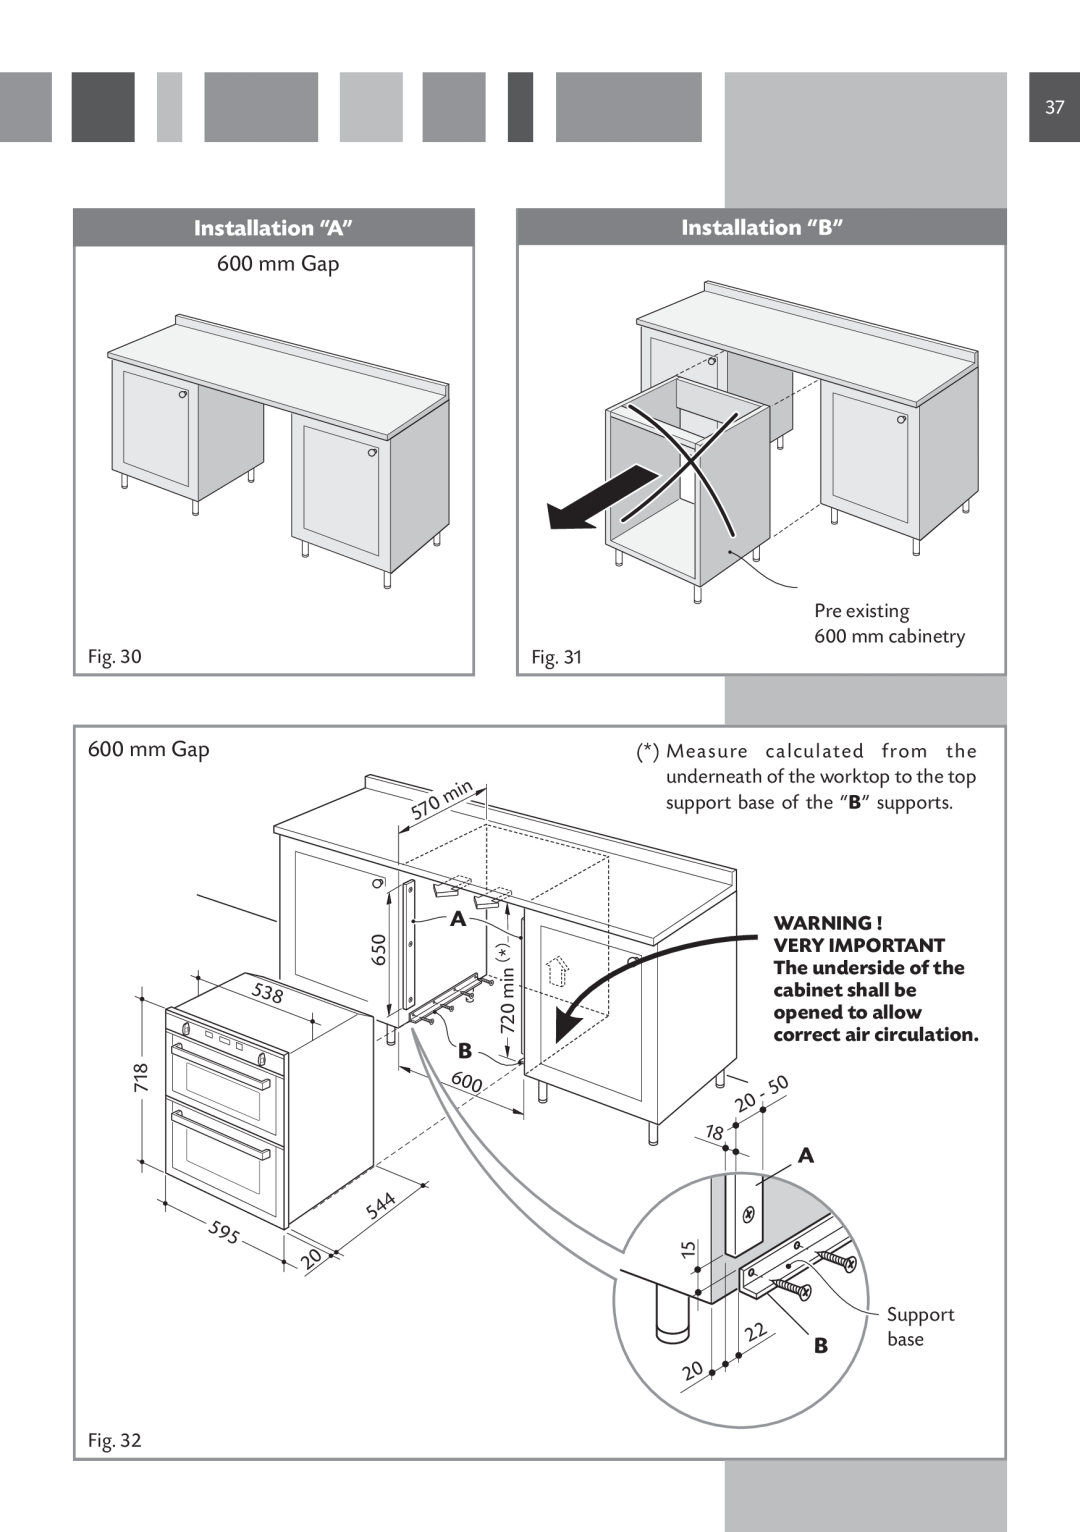 CDA DV 770 manual Installation “B”, mm Gap, Installation “A”, mm cabinetry, Support 